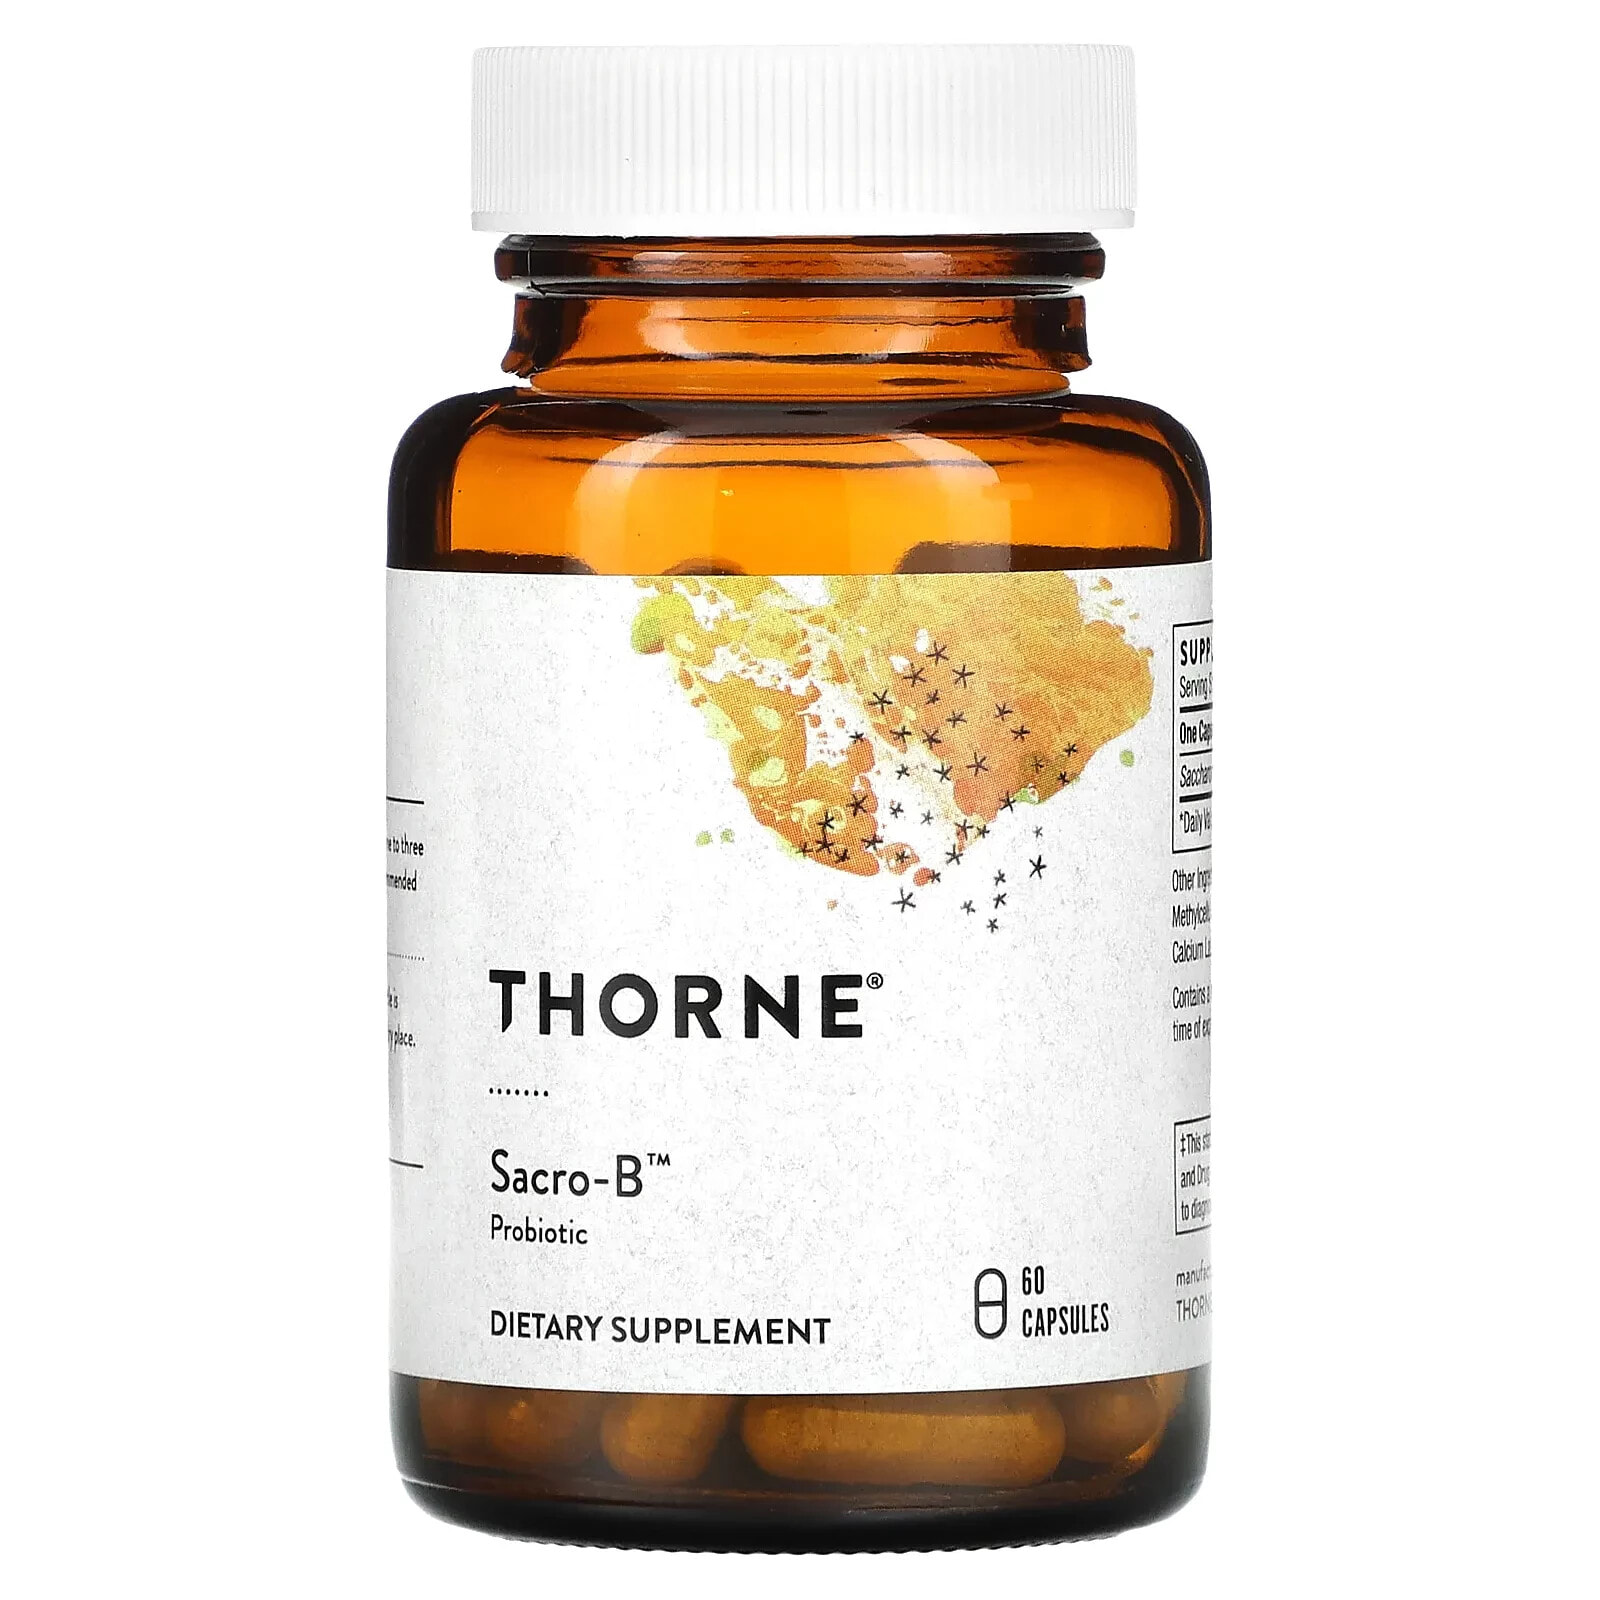 Thorne, Thorne's, пробиотики, 60 капсул